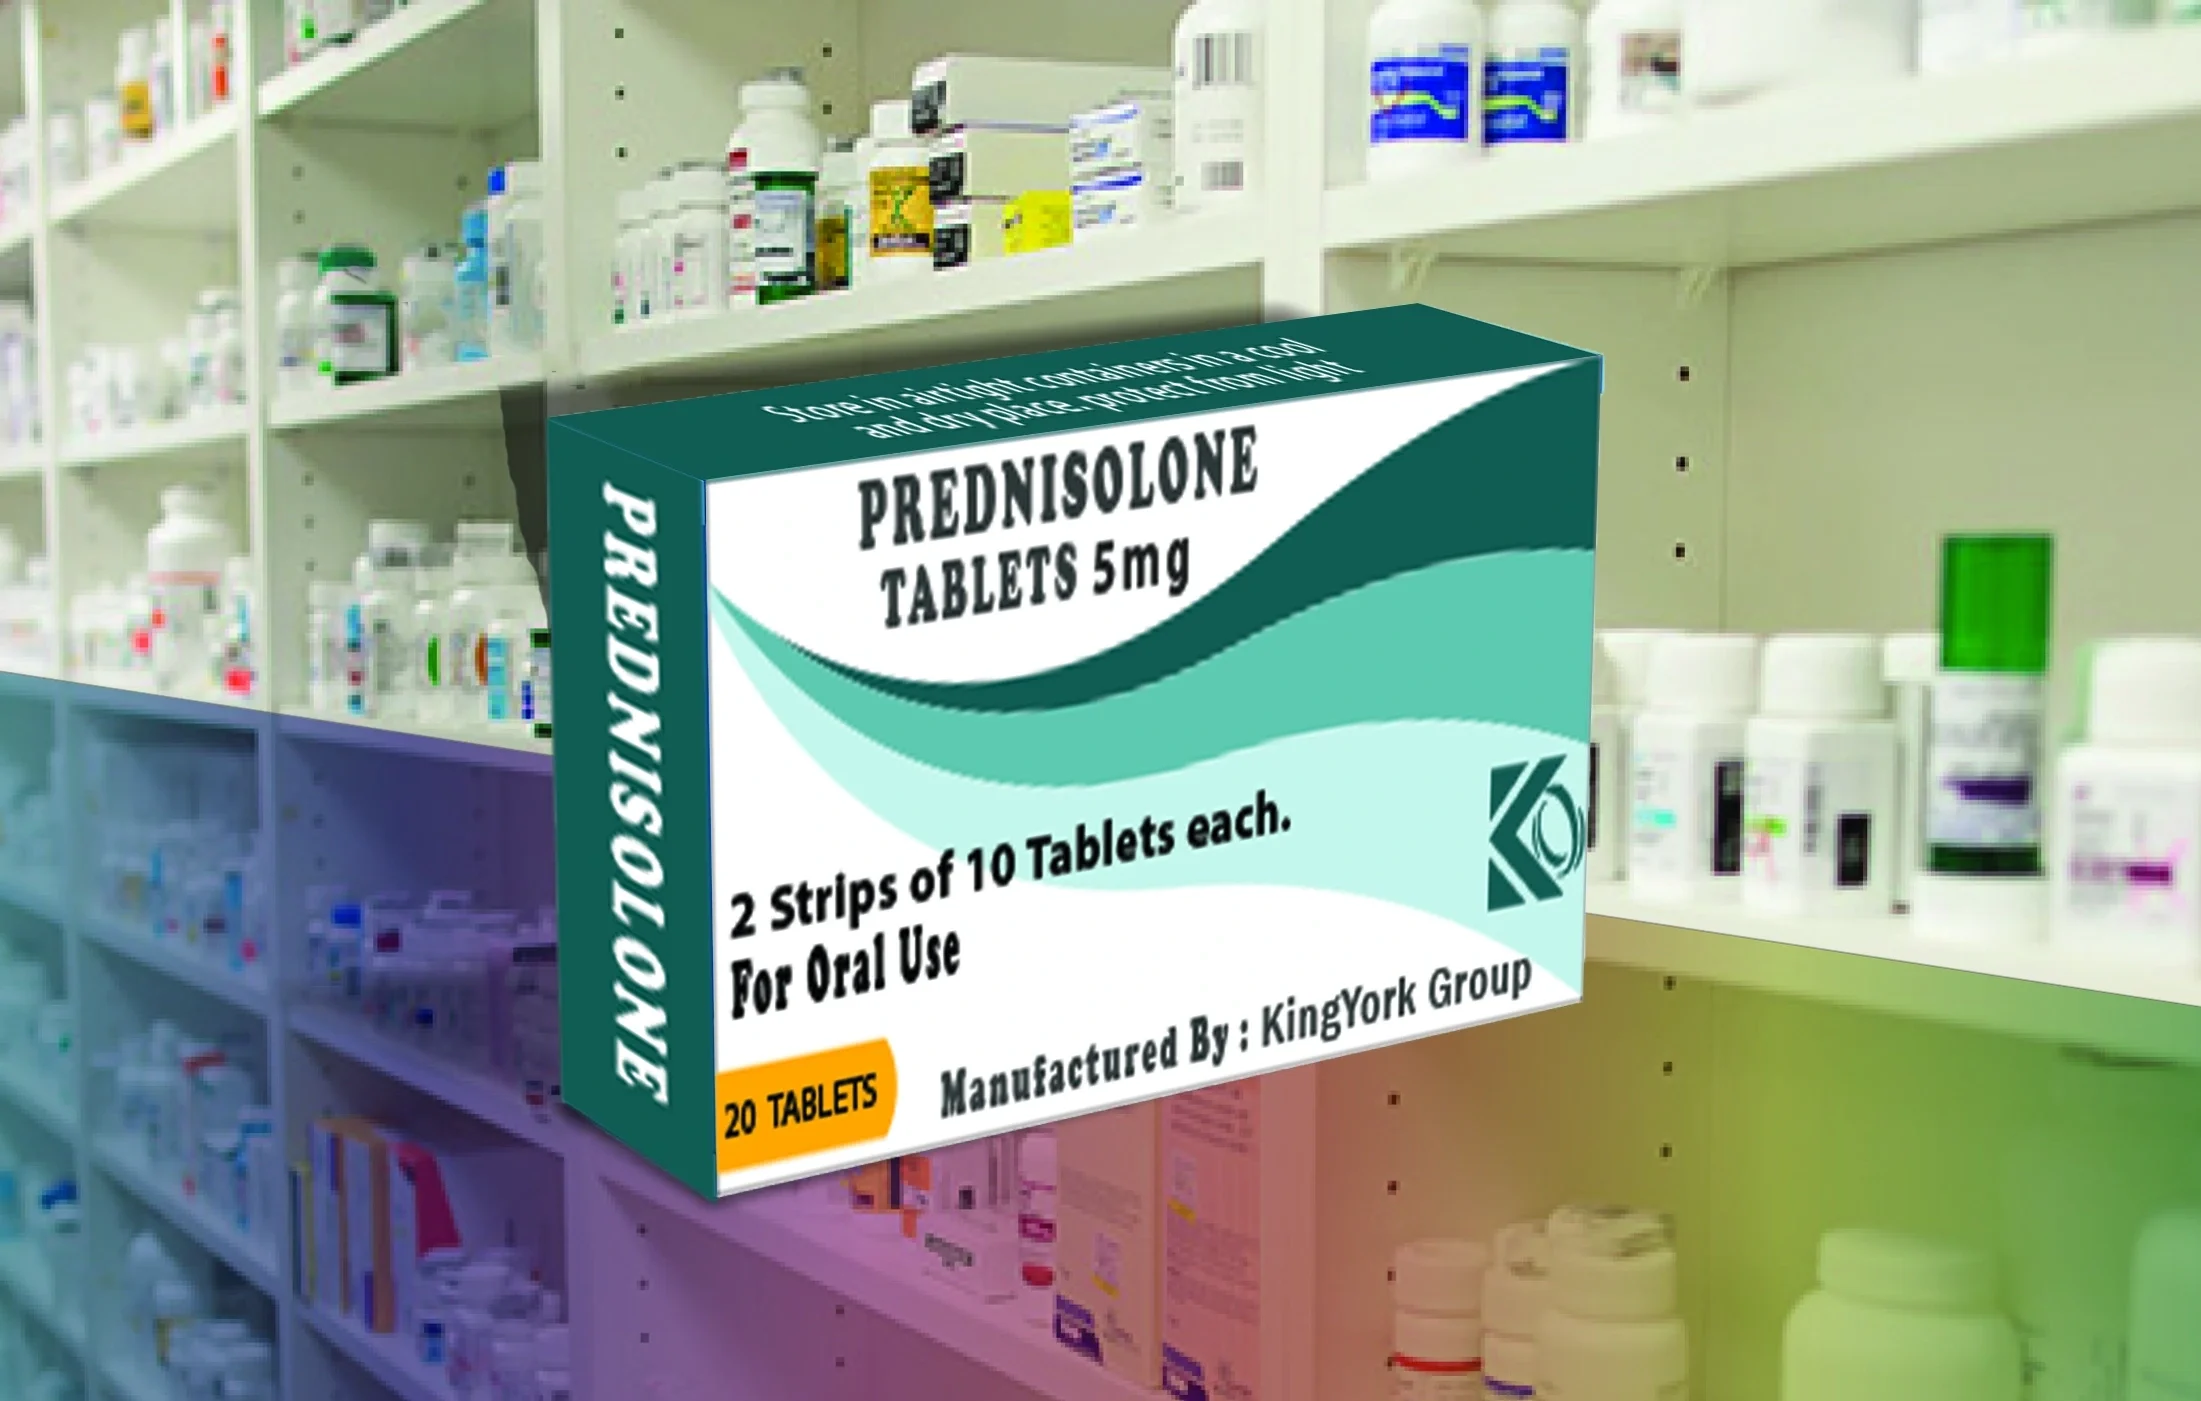 'prednisolone tablets', 'prednisolone 5mg tablets', 'corticosteroid tablets', 'steroid'